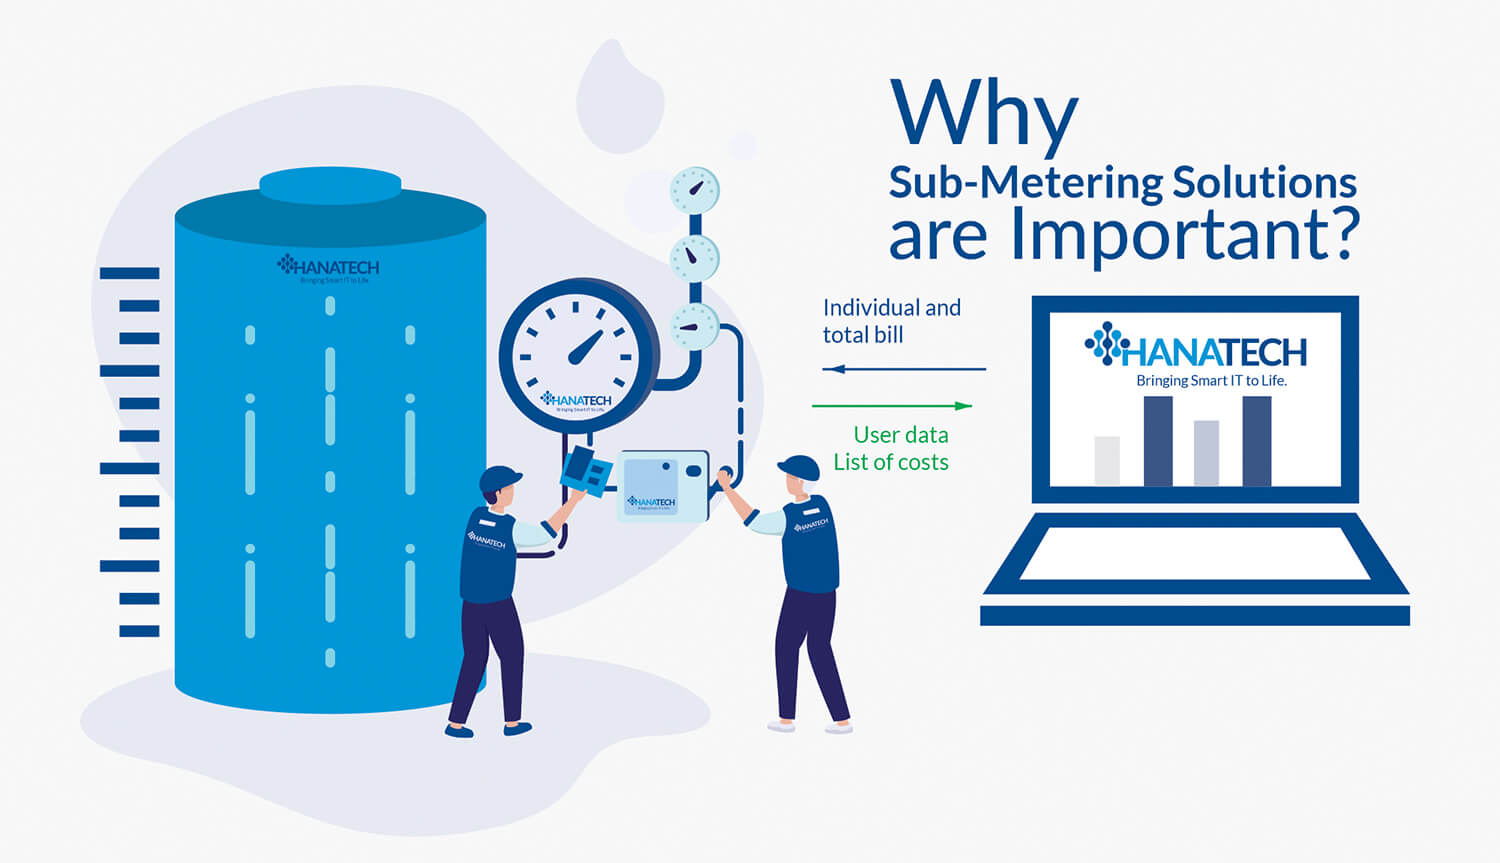 Sub-Metering